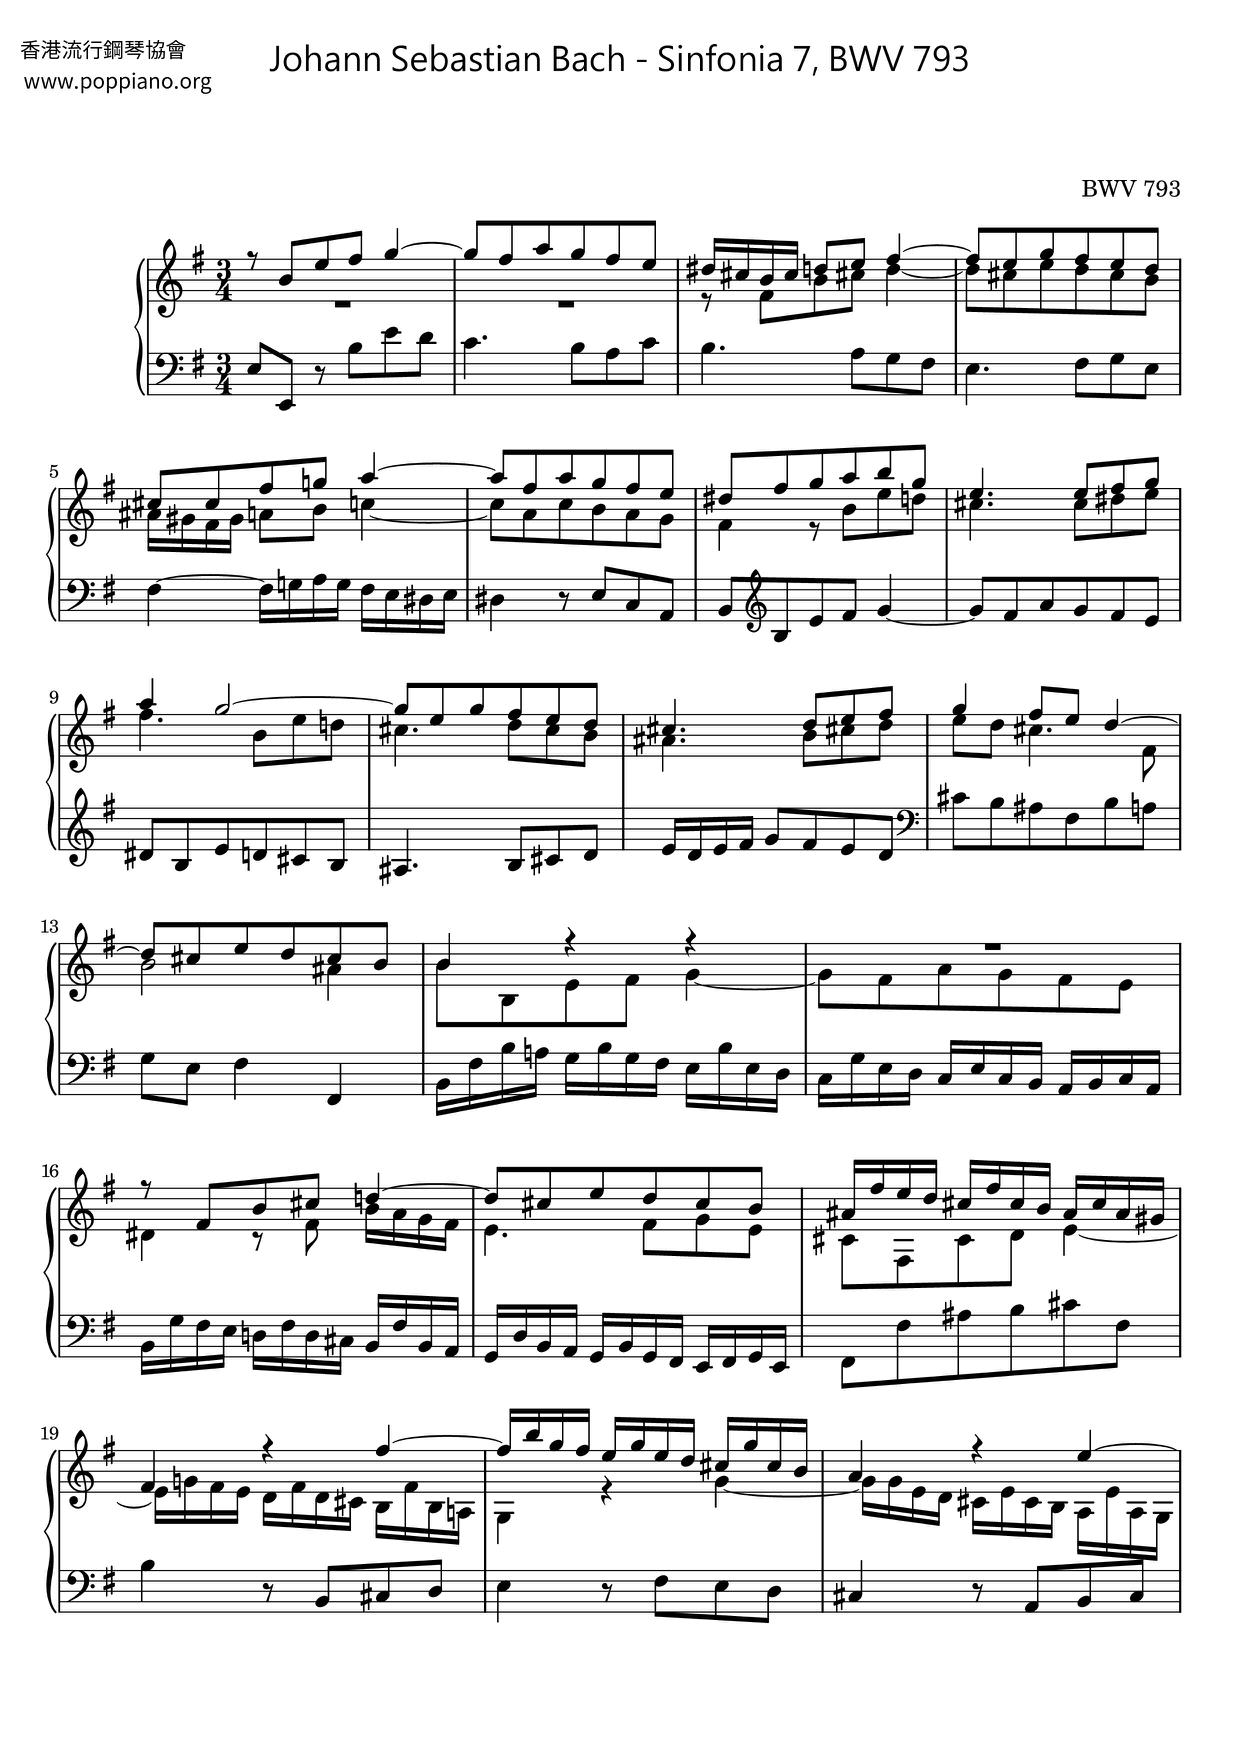 Sinfonia 7, BWV 793 Score